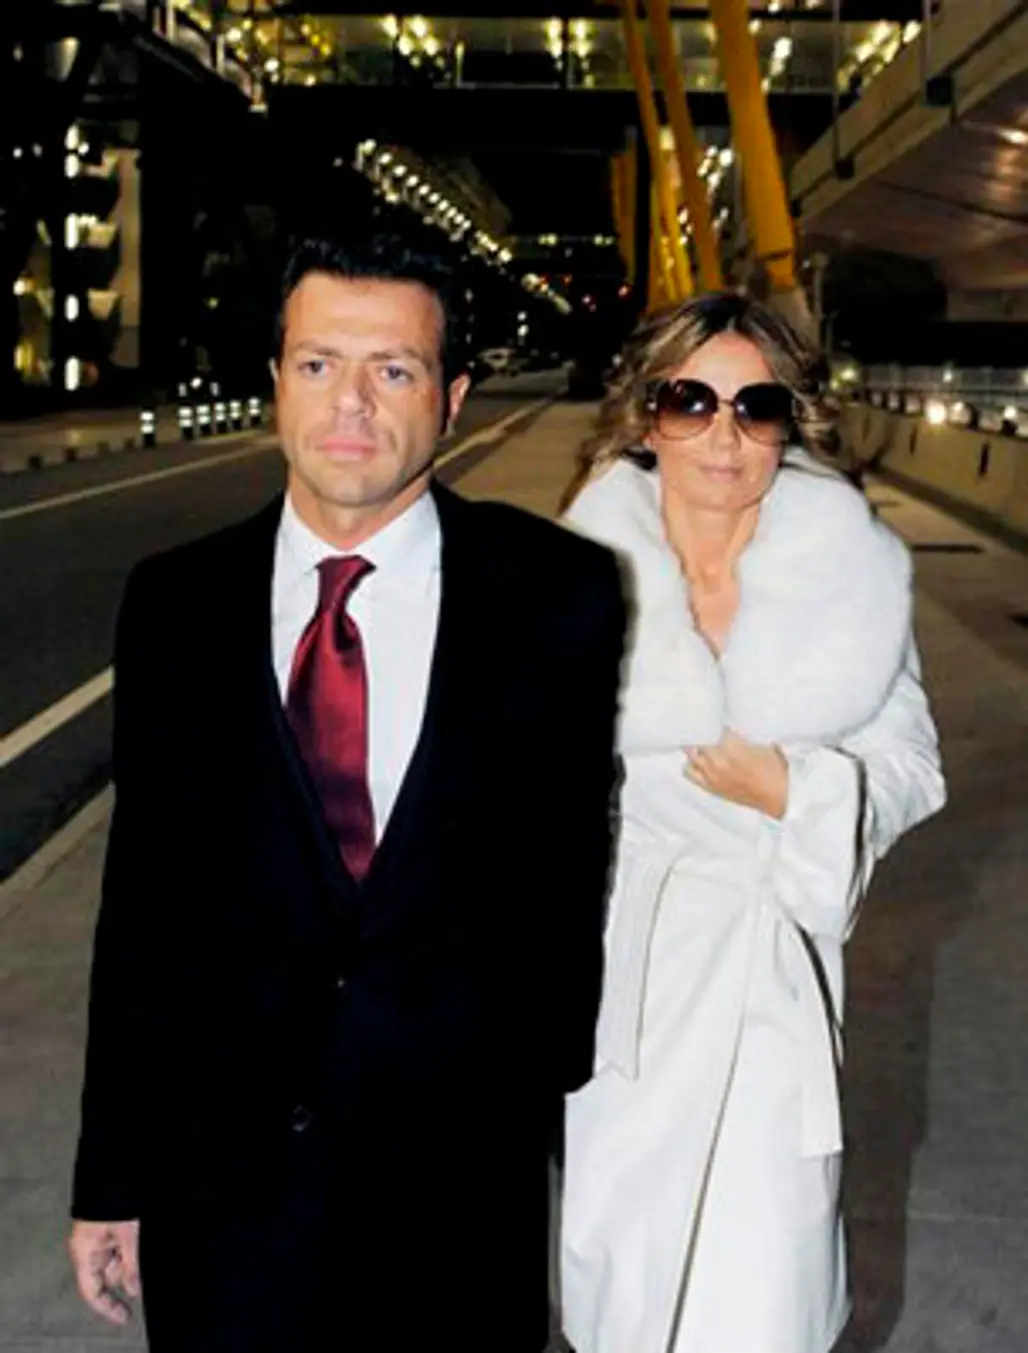 Geri Halliwell and Fabrizio Politi